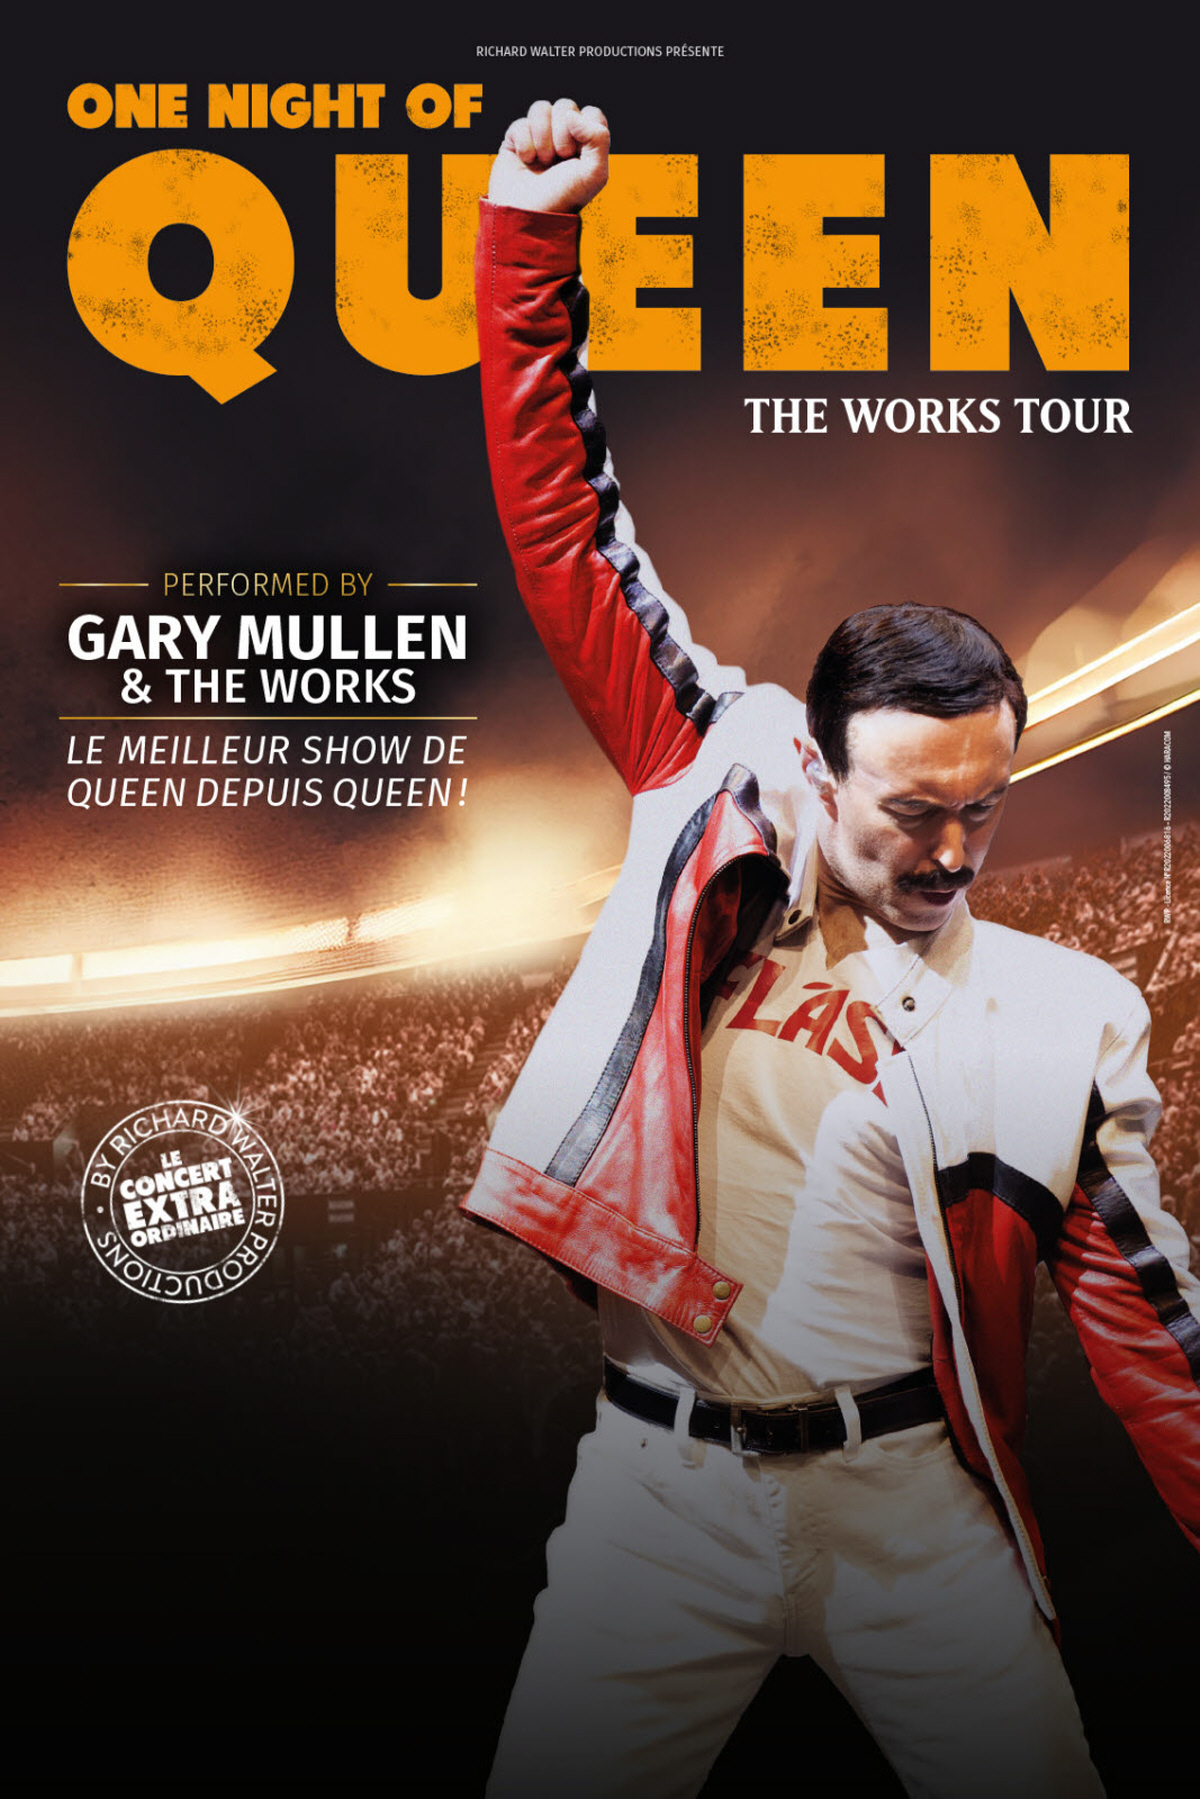 One Night Of Queen - The Works Tour in der Elispace Tickets